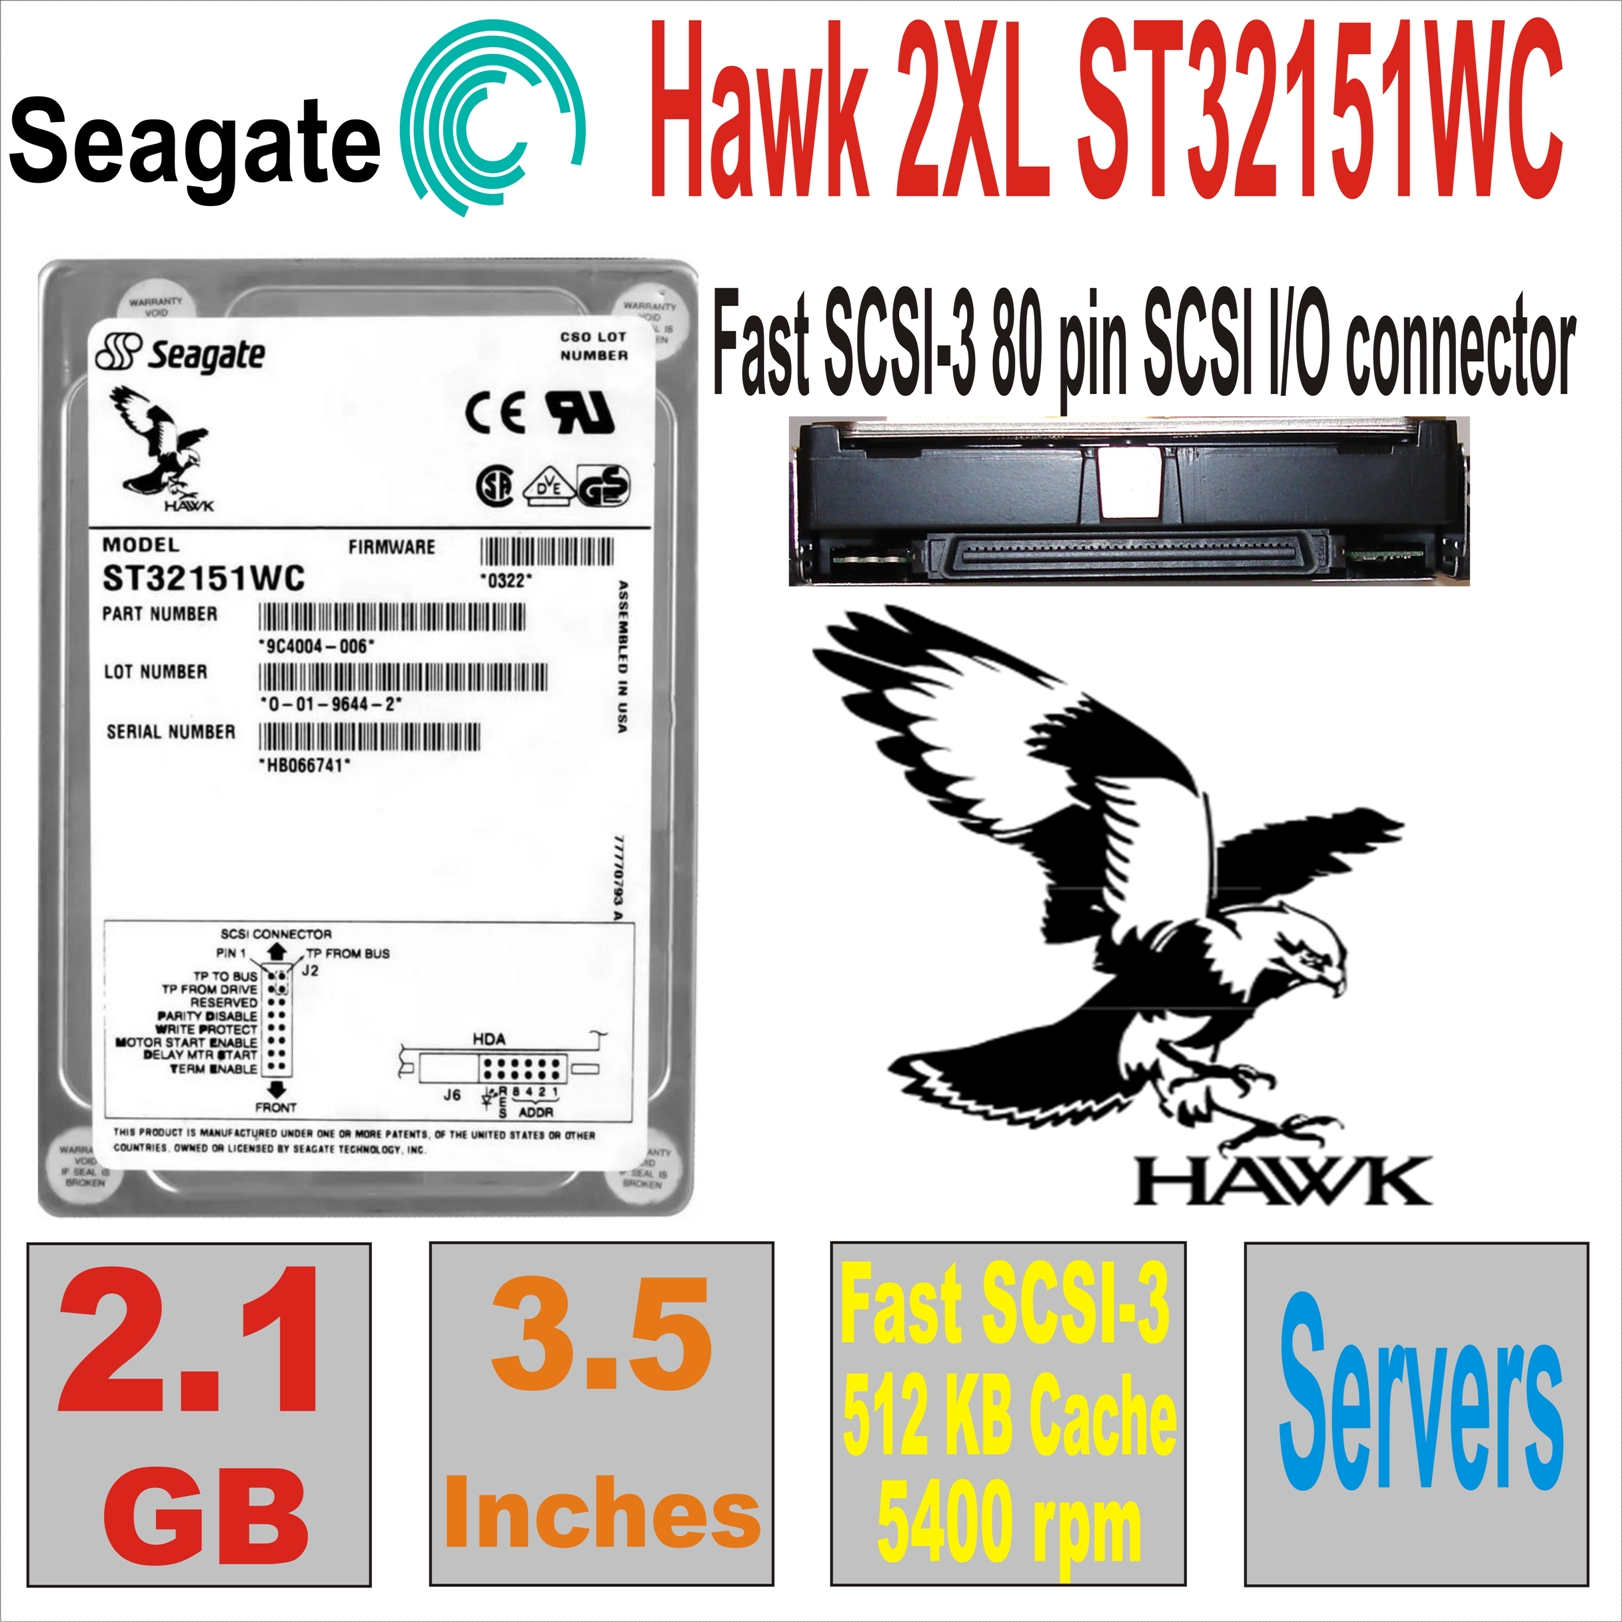 HDD 3.5` SCSI 2.1Gb SEAGATE Hawk 2XL ST32151WC